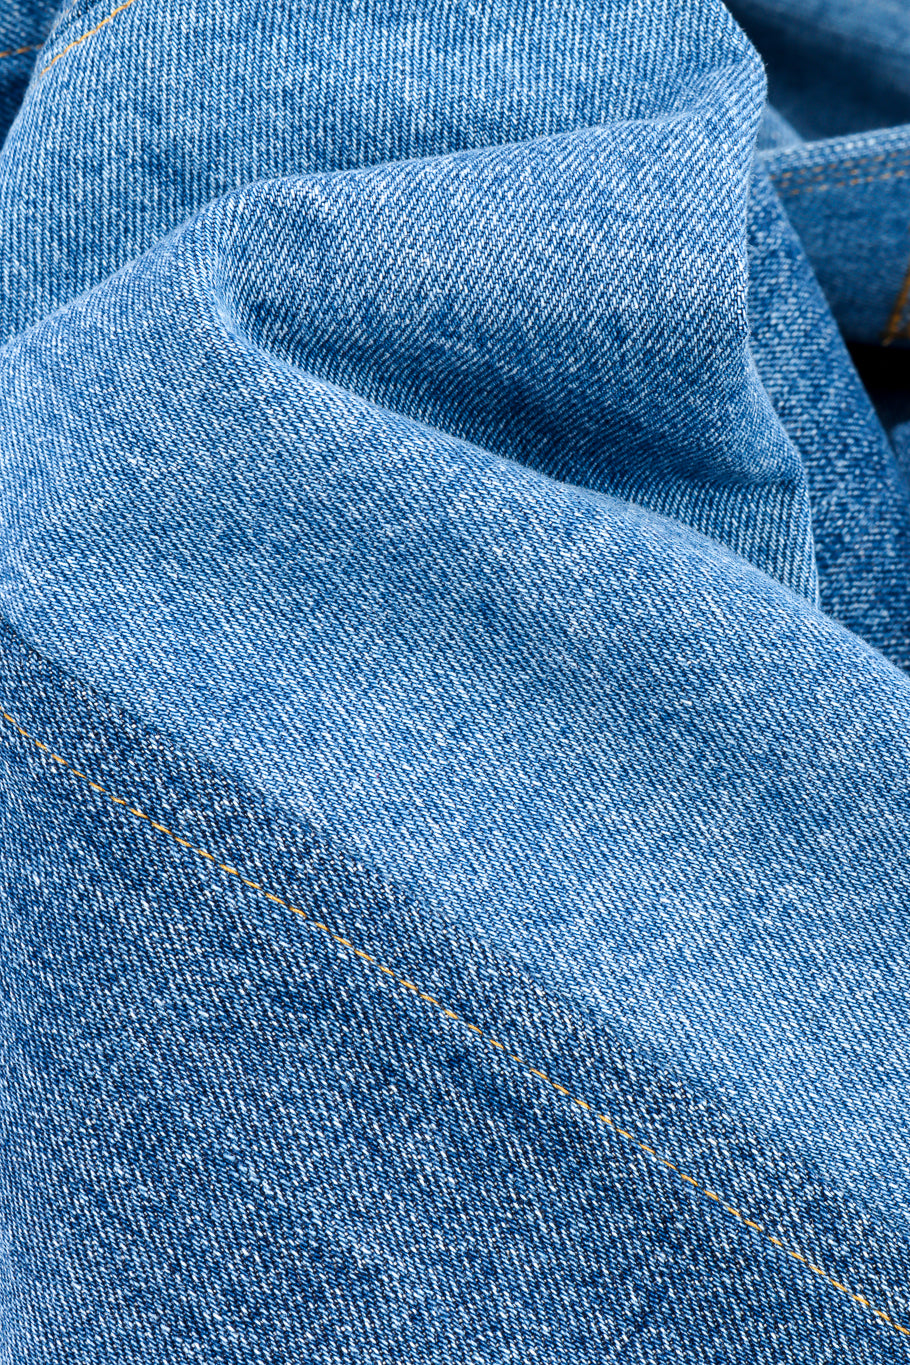 Junya Watanabe Indigo Denim Trench Coat denim fabric closeup @recess la